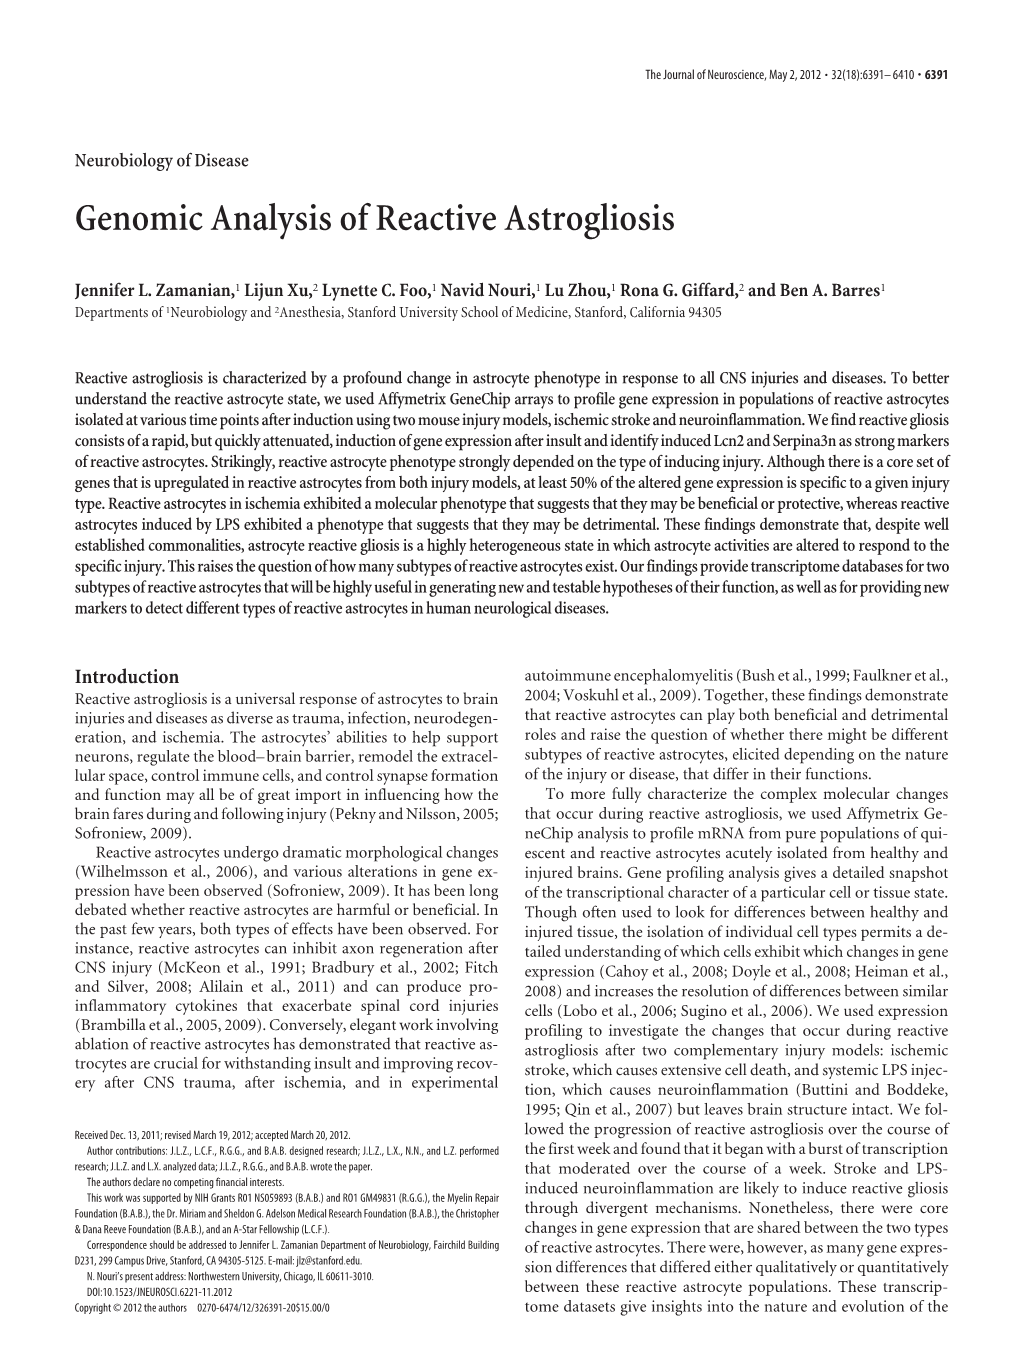 Genomic Analysis of Reactive Astrogliosis